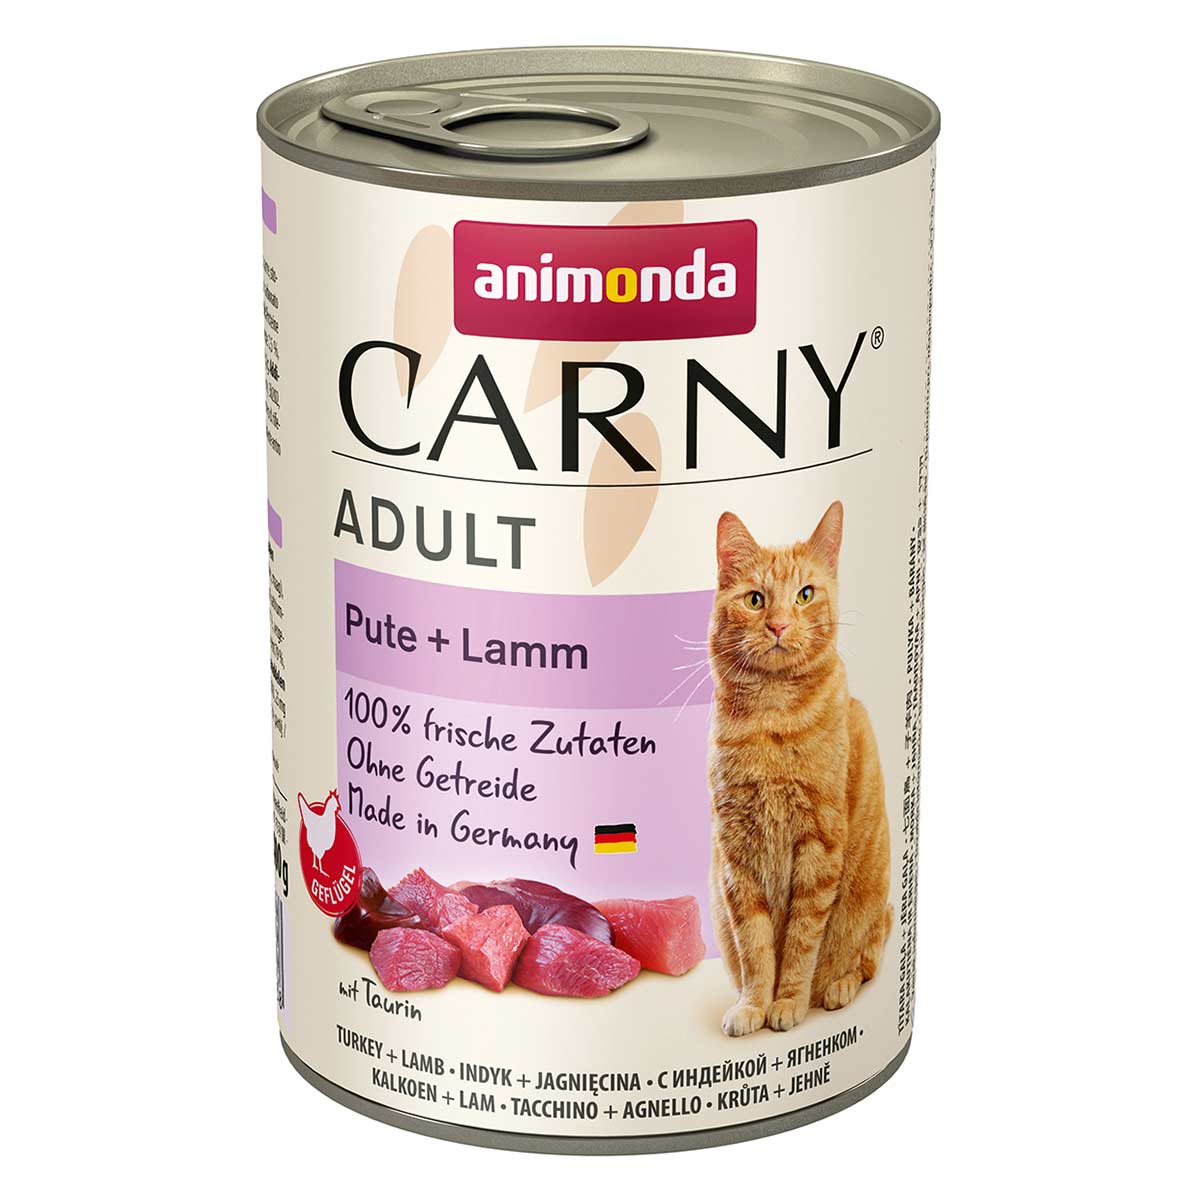 animonda Carny Adult Pute + Lamm 24x400g